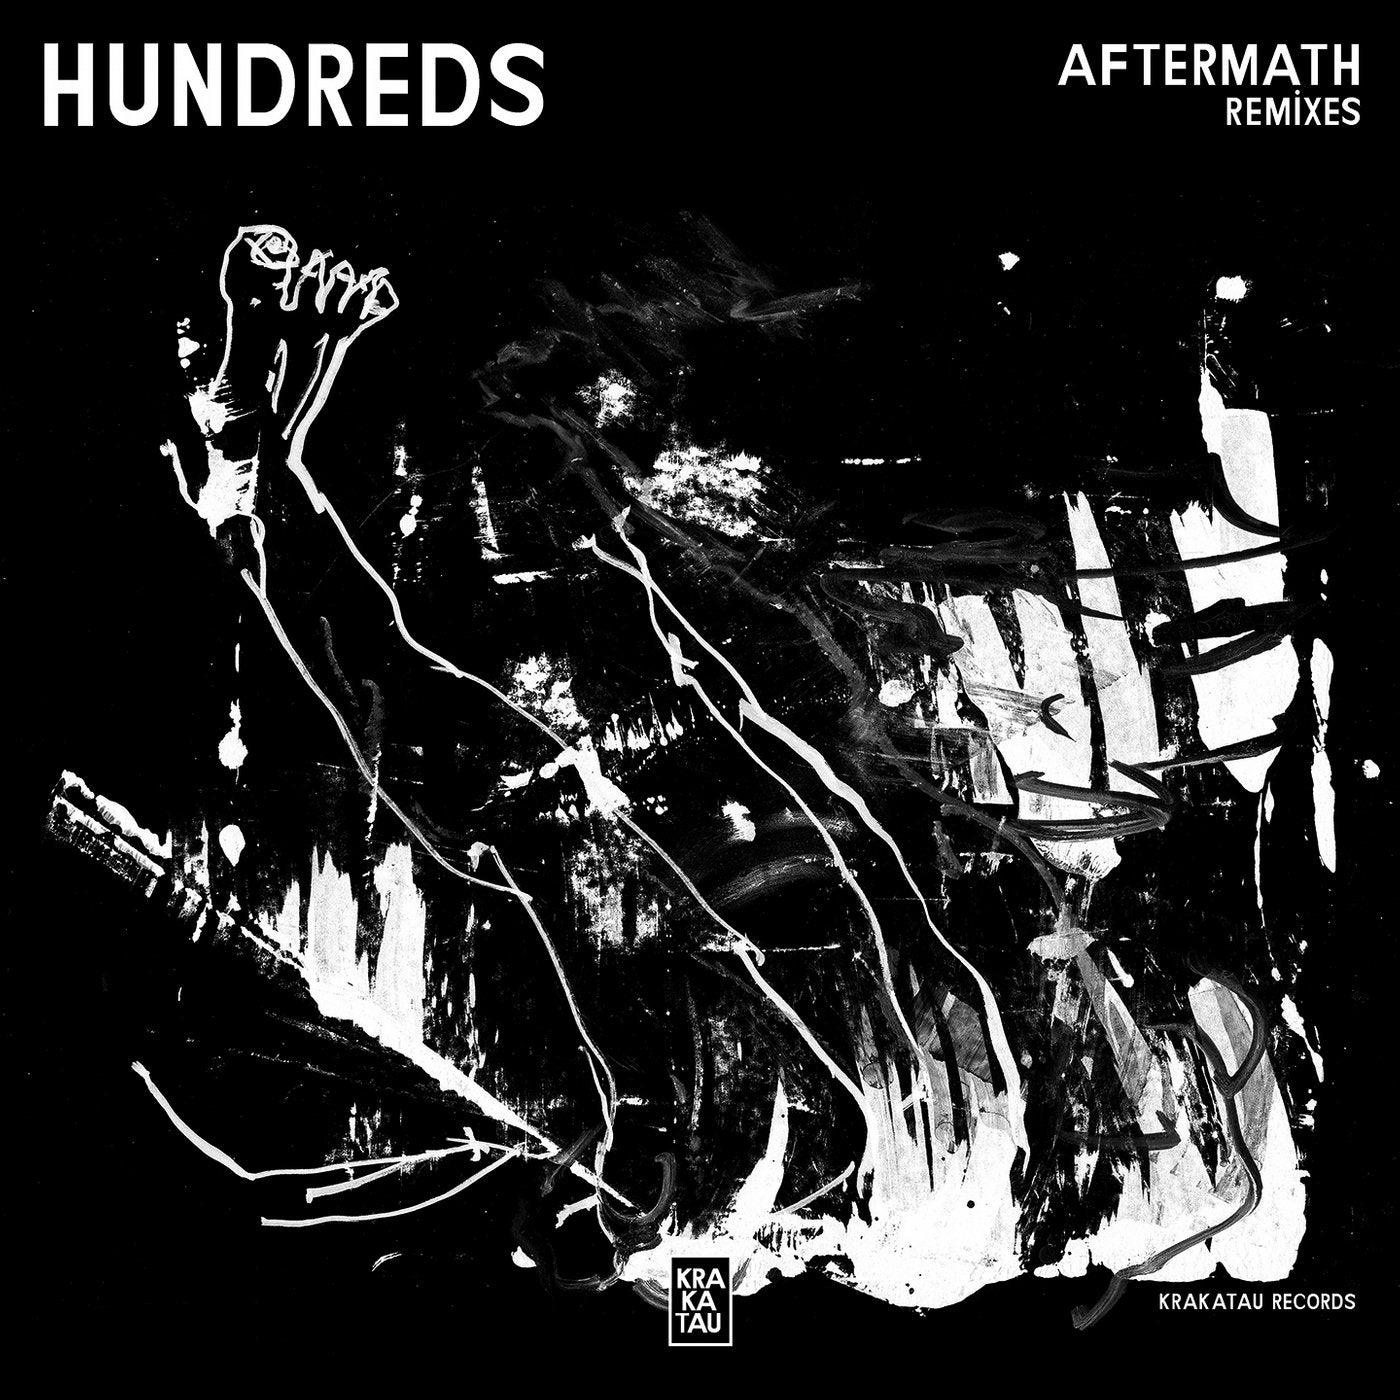 Aftermath Remixes